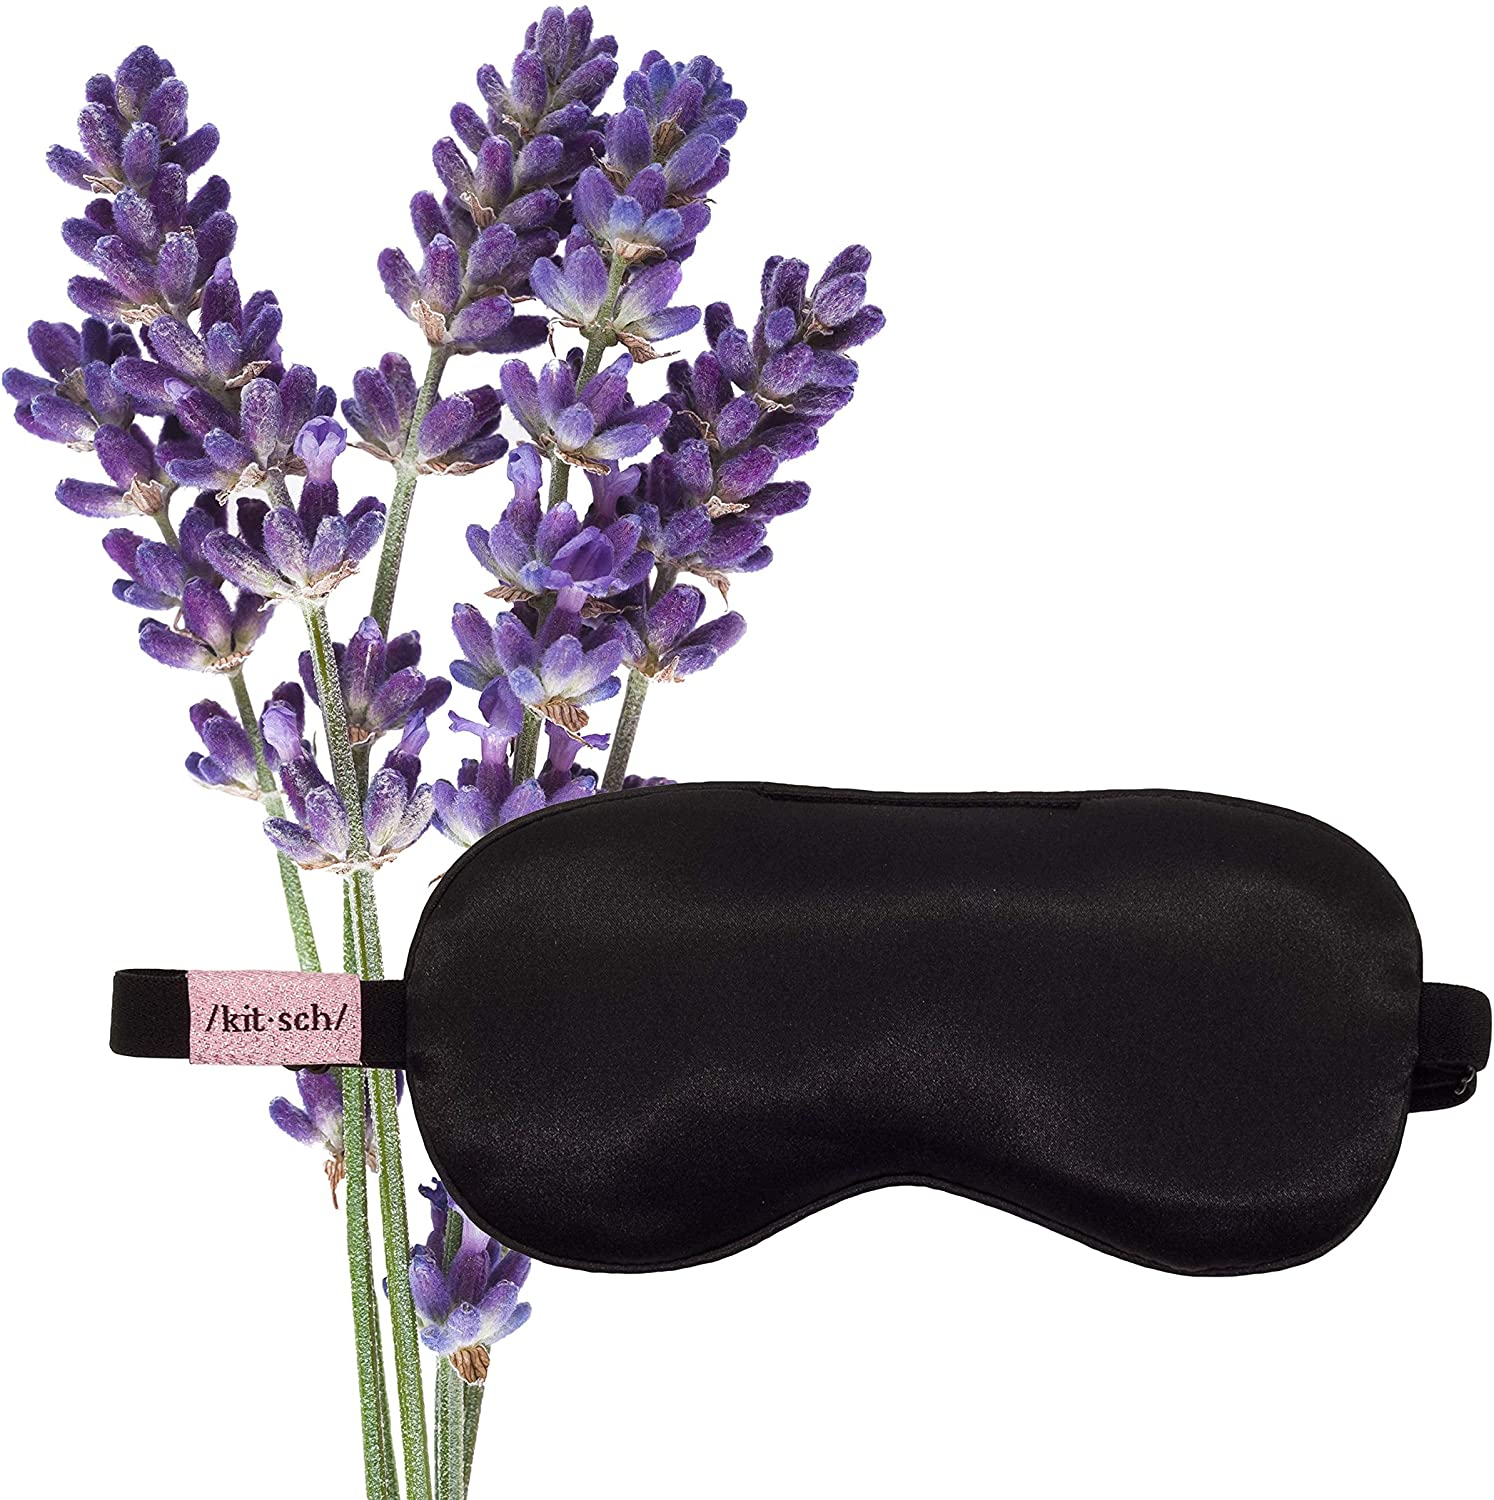 Kitsch Lavender Weighted Satin Eye Mask - Gentle Massage Effect - (Black) - image 1 of 5